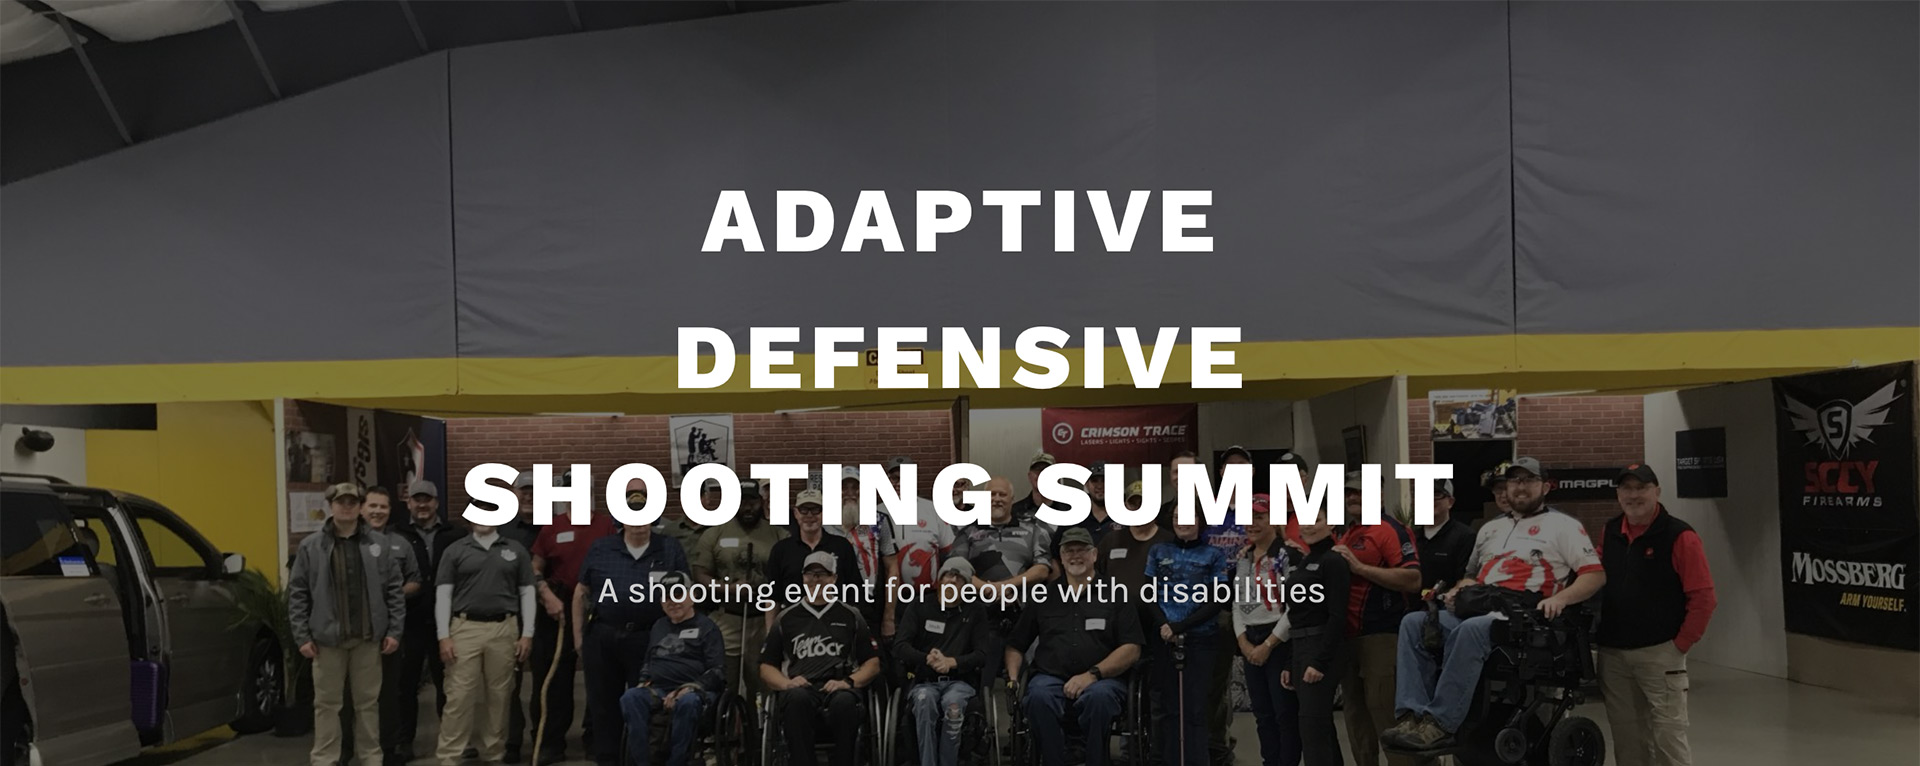 Adaptive Defensive Shooting Summit